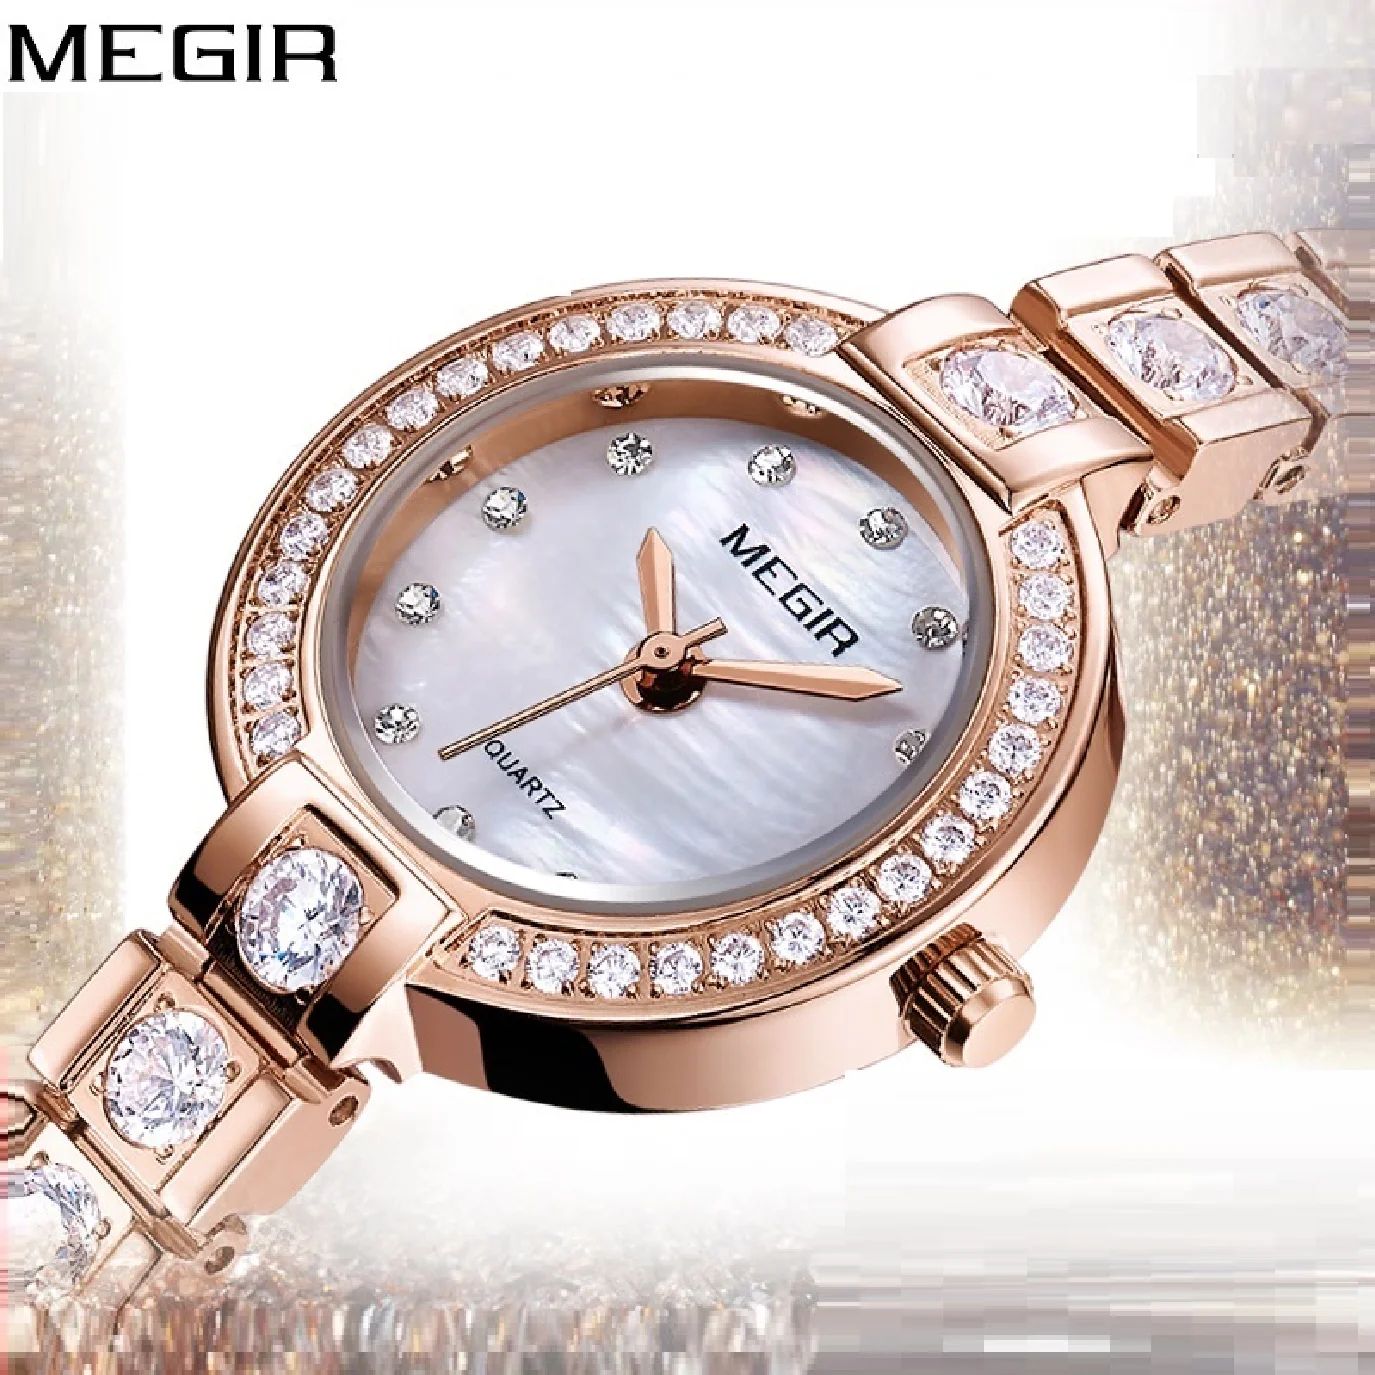 

MEGIR Women Bracelet Watches Top Brand Luxury Rose Brass Lover Ladies Watch Women Clock Waterproof Relogio Feminino Montre Femme